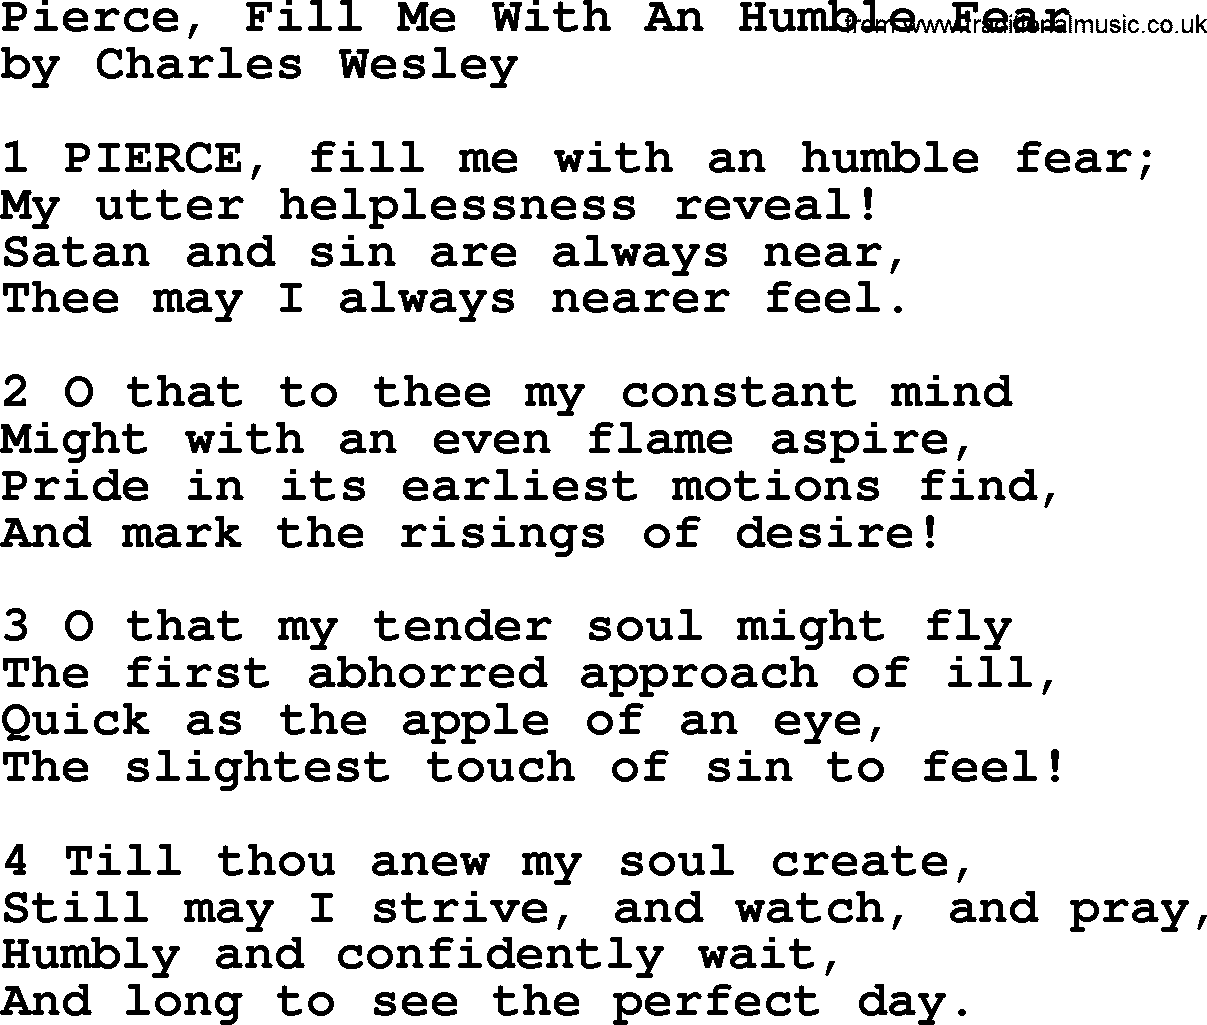 Charles Wesley hymn: Pierce, Fill Me With An Humble Fear, lyrics